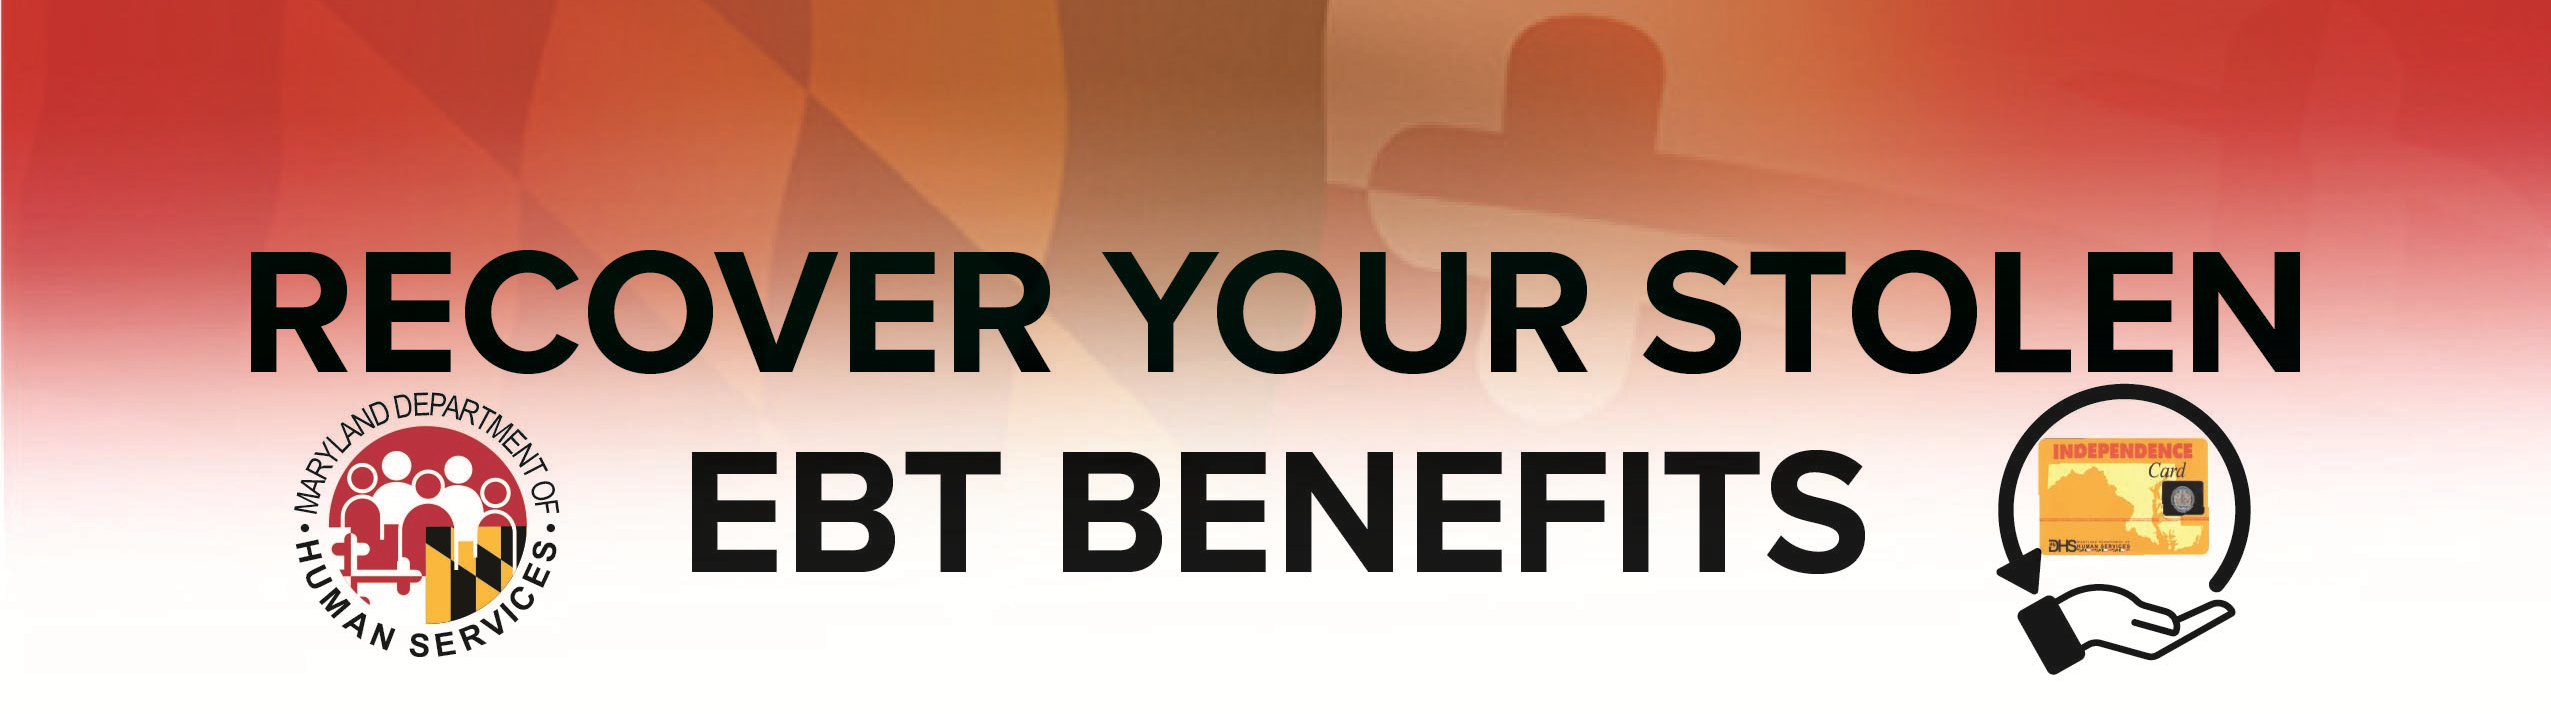 Recover your stolen EBT benefits